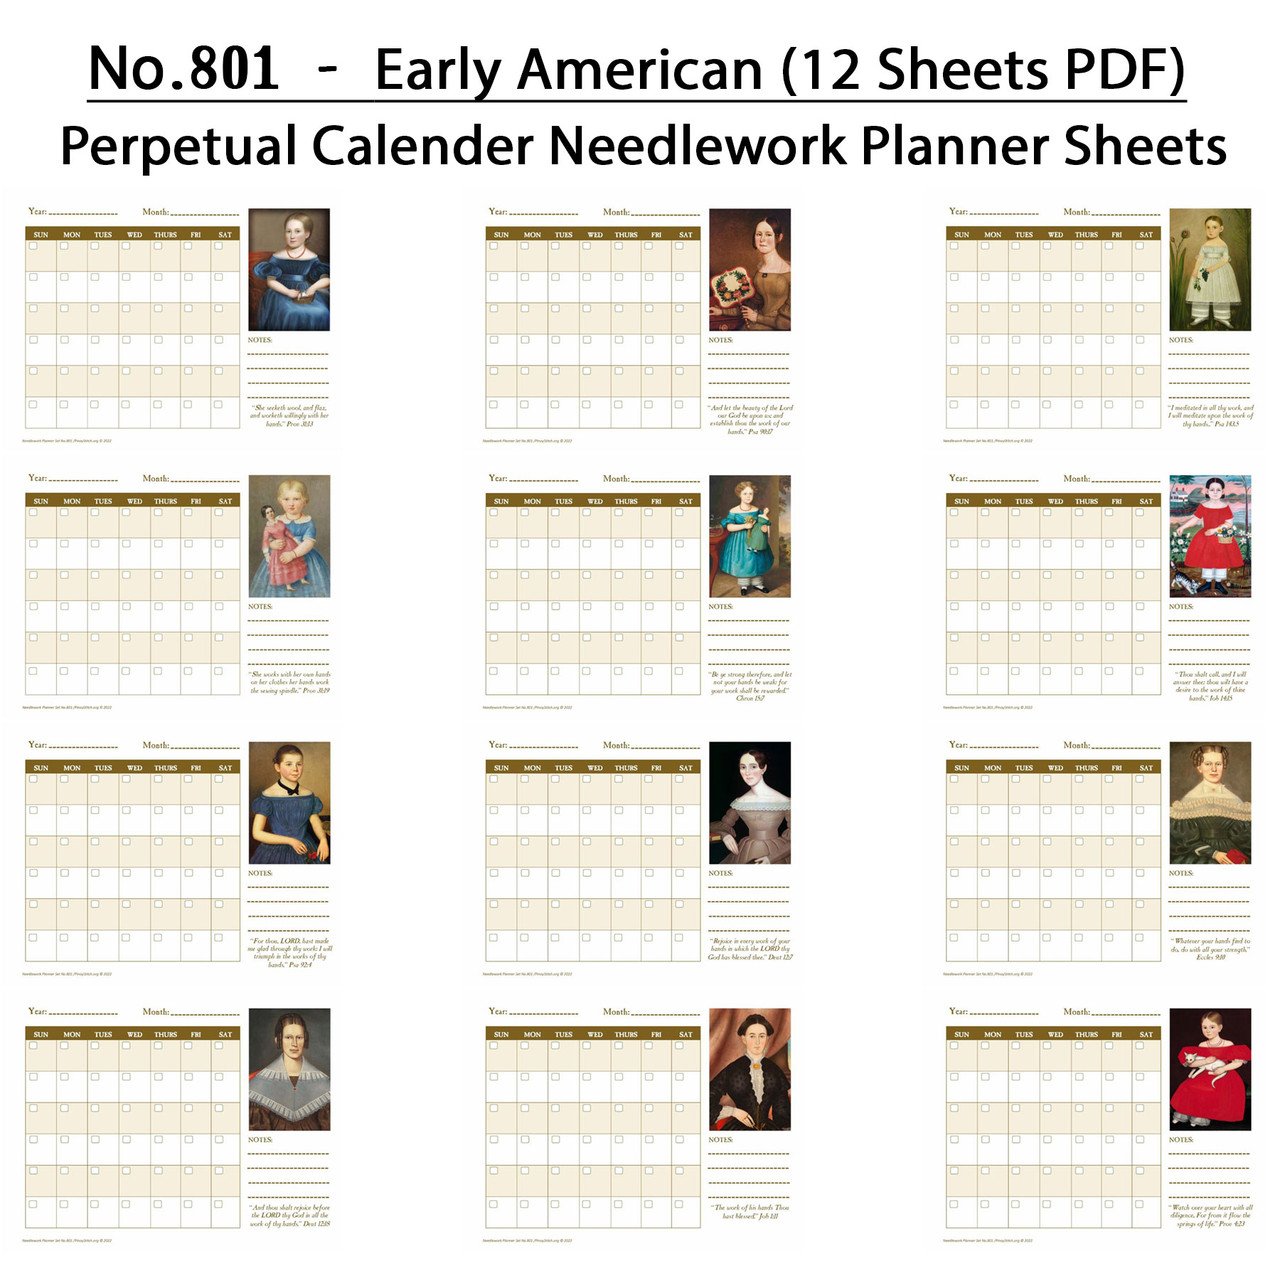 801 Early American - Needlework Perpetual Calendar Planner Sheets (12 Sheets PDF Format)